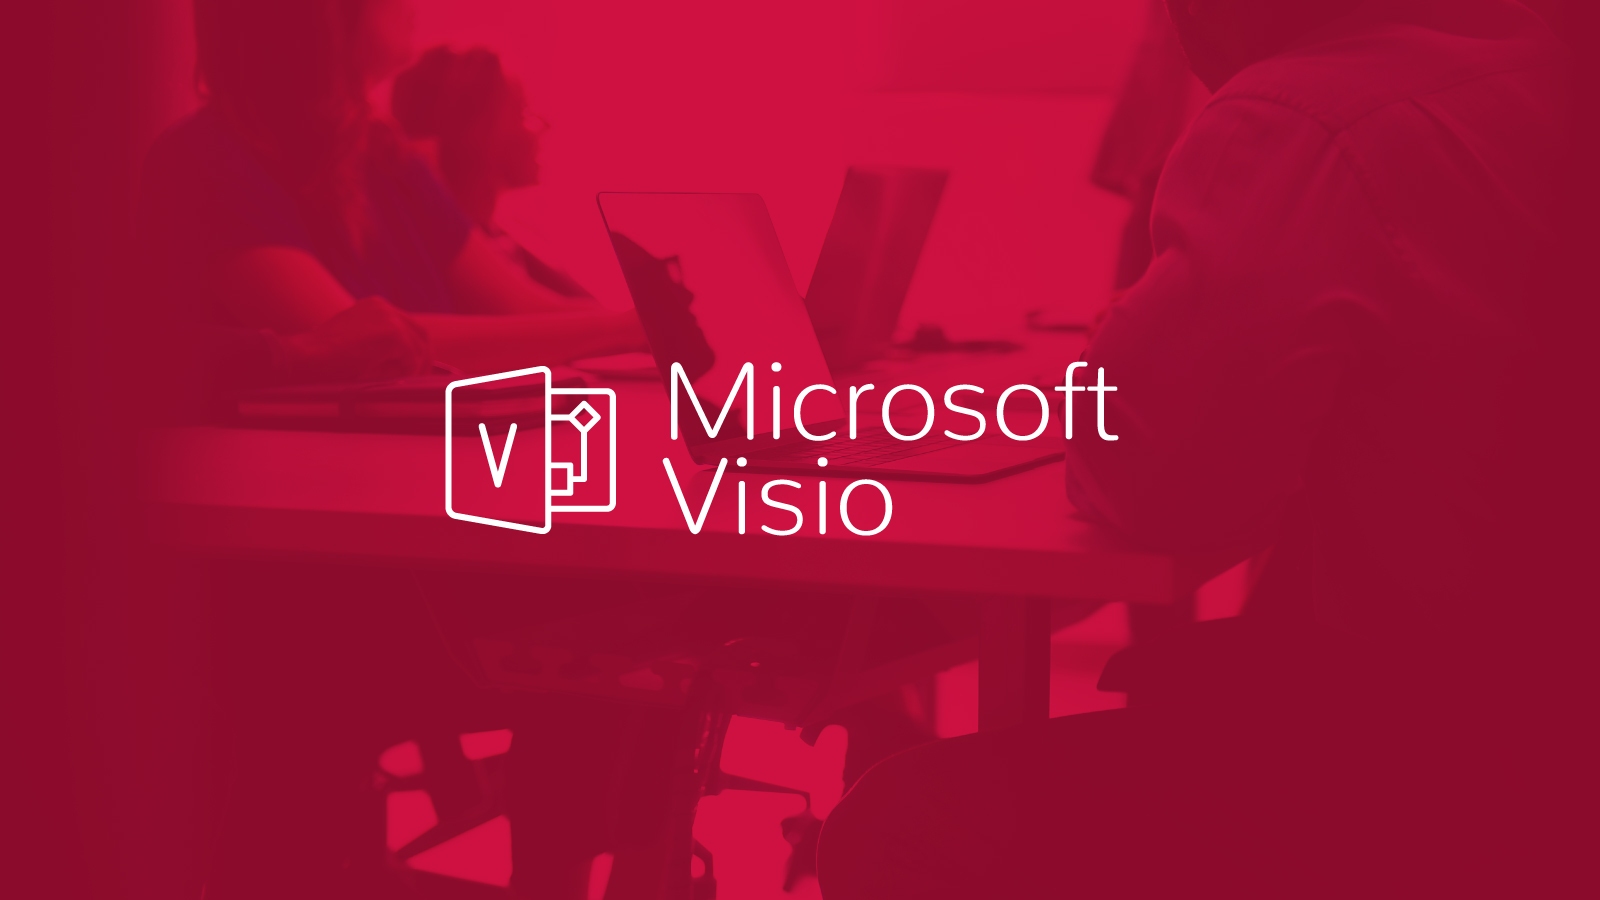 Aplicaciones para Oficina - Microsoft Visio